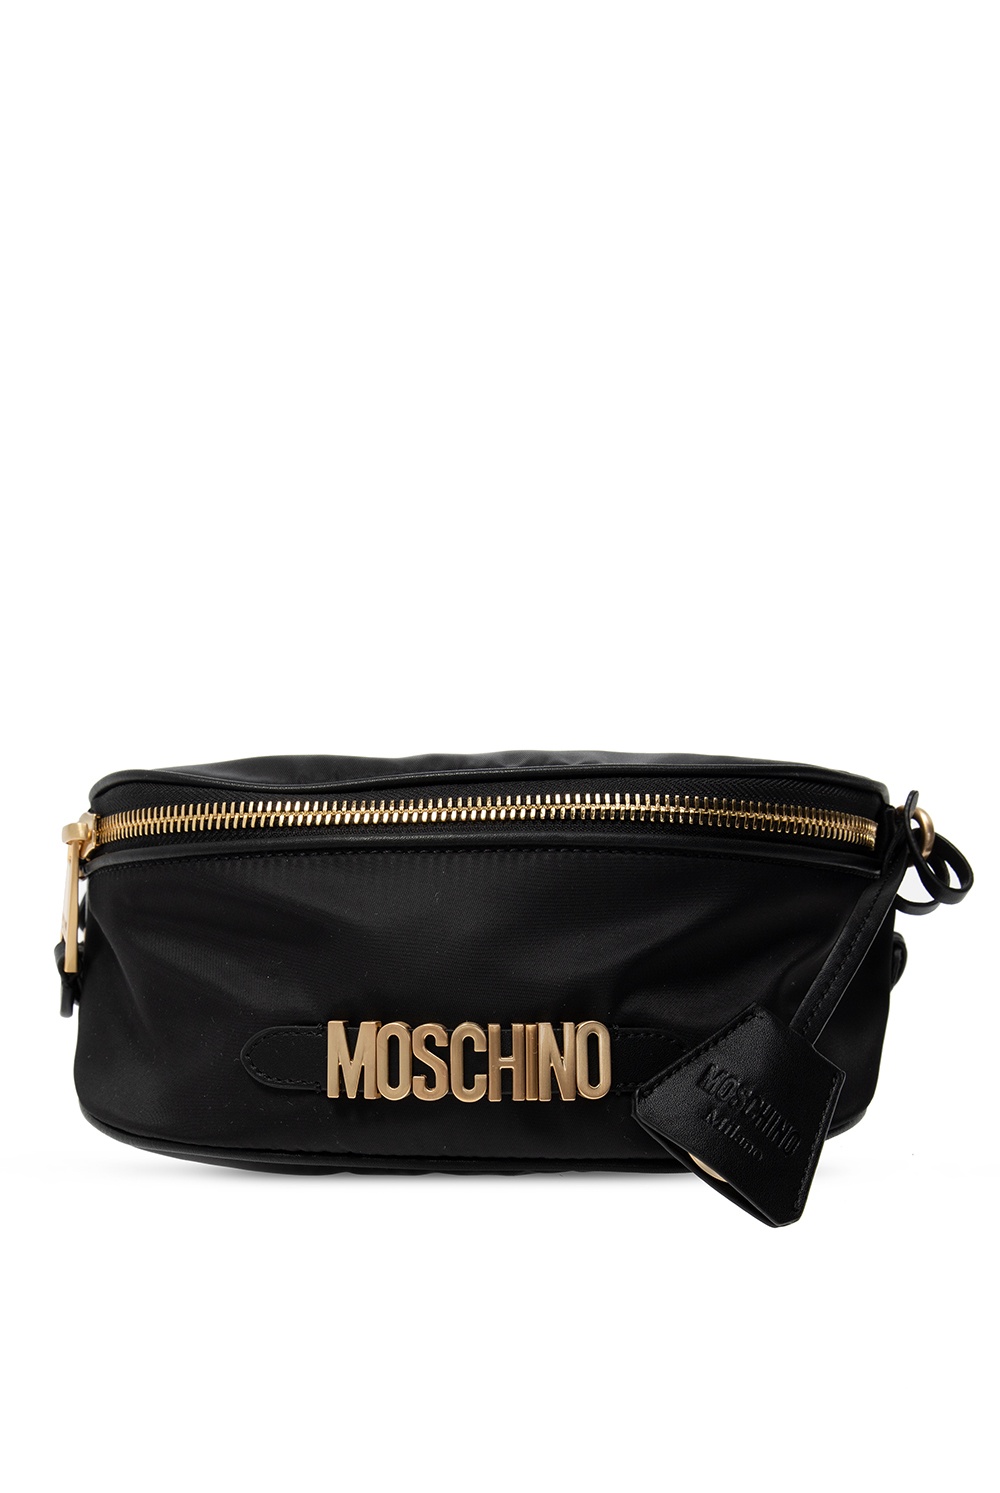 moschino bag belt